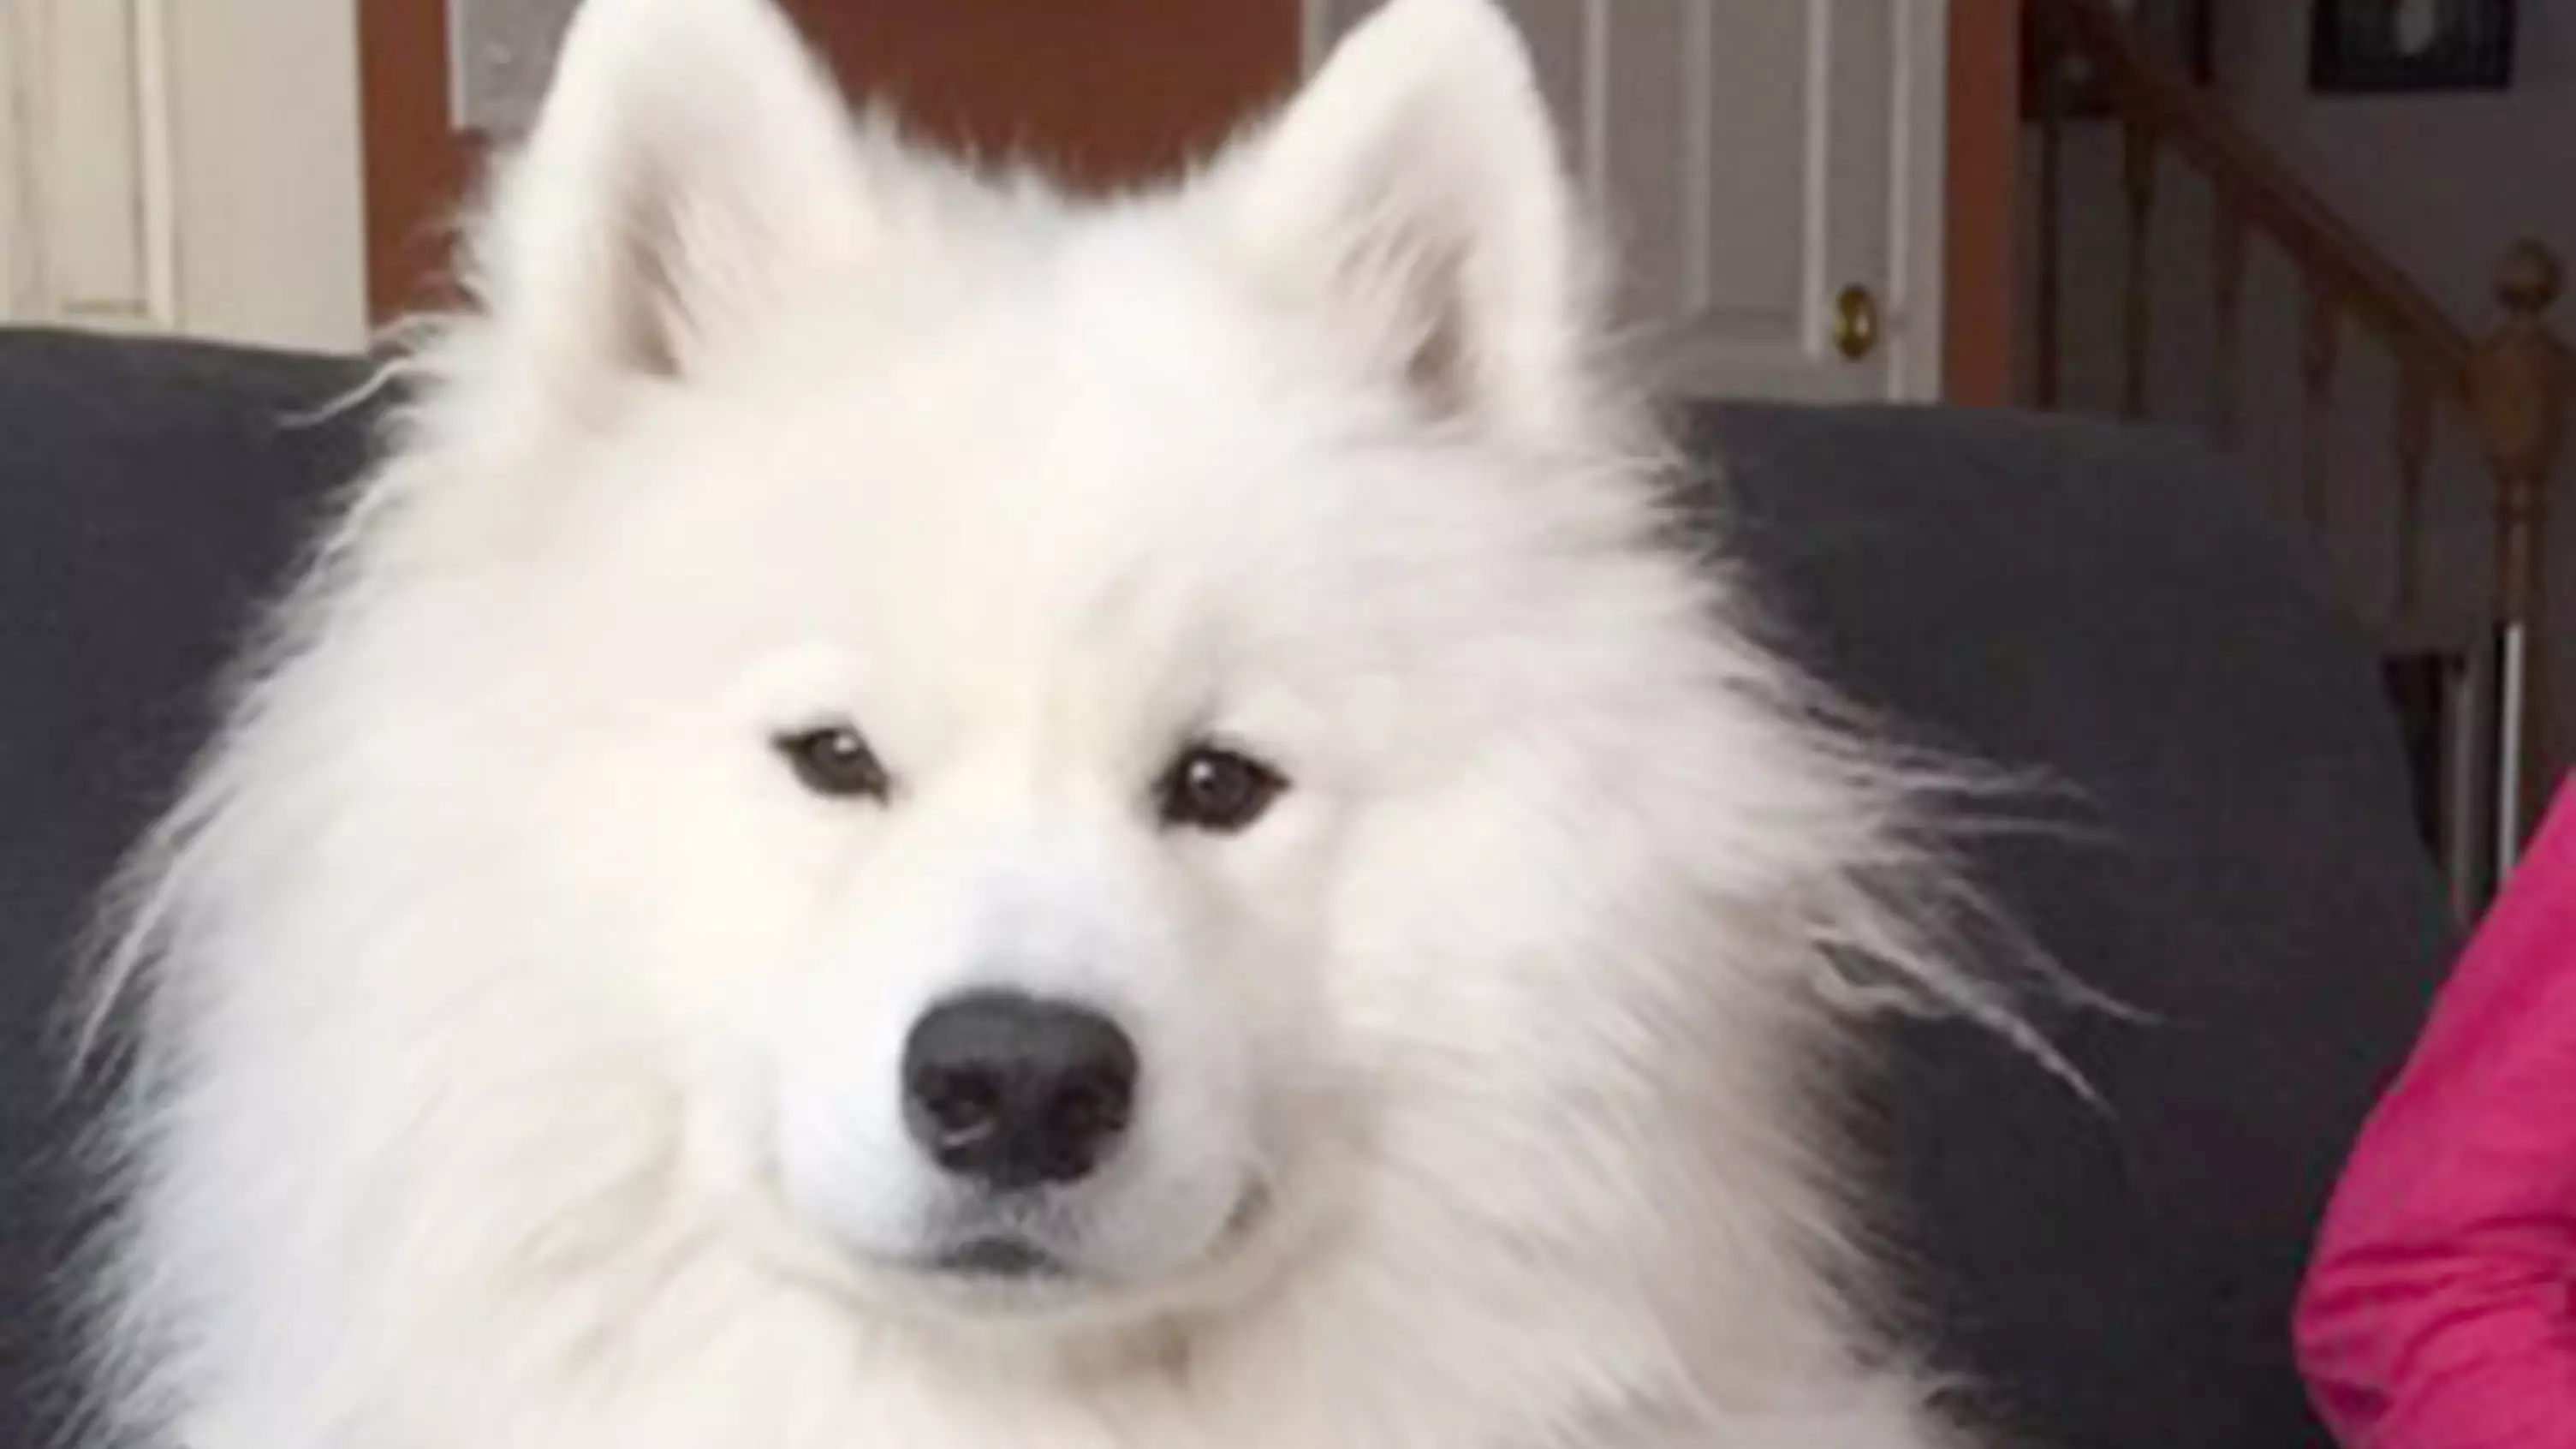 Dog Owner Shocked After Groomer Accidentally Shaves Off Her Dog's Fluffy Coat